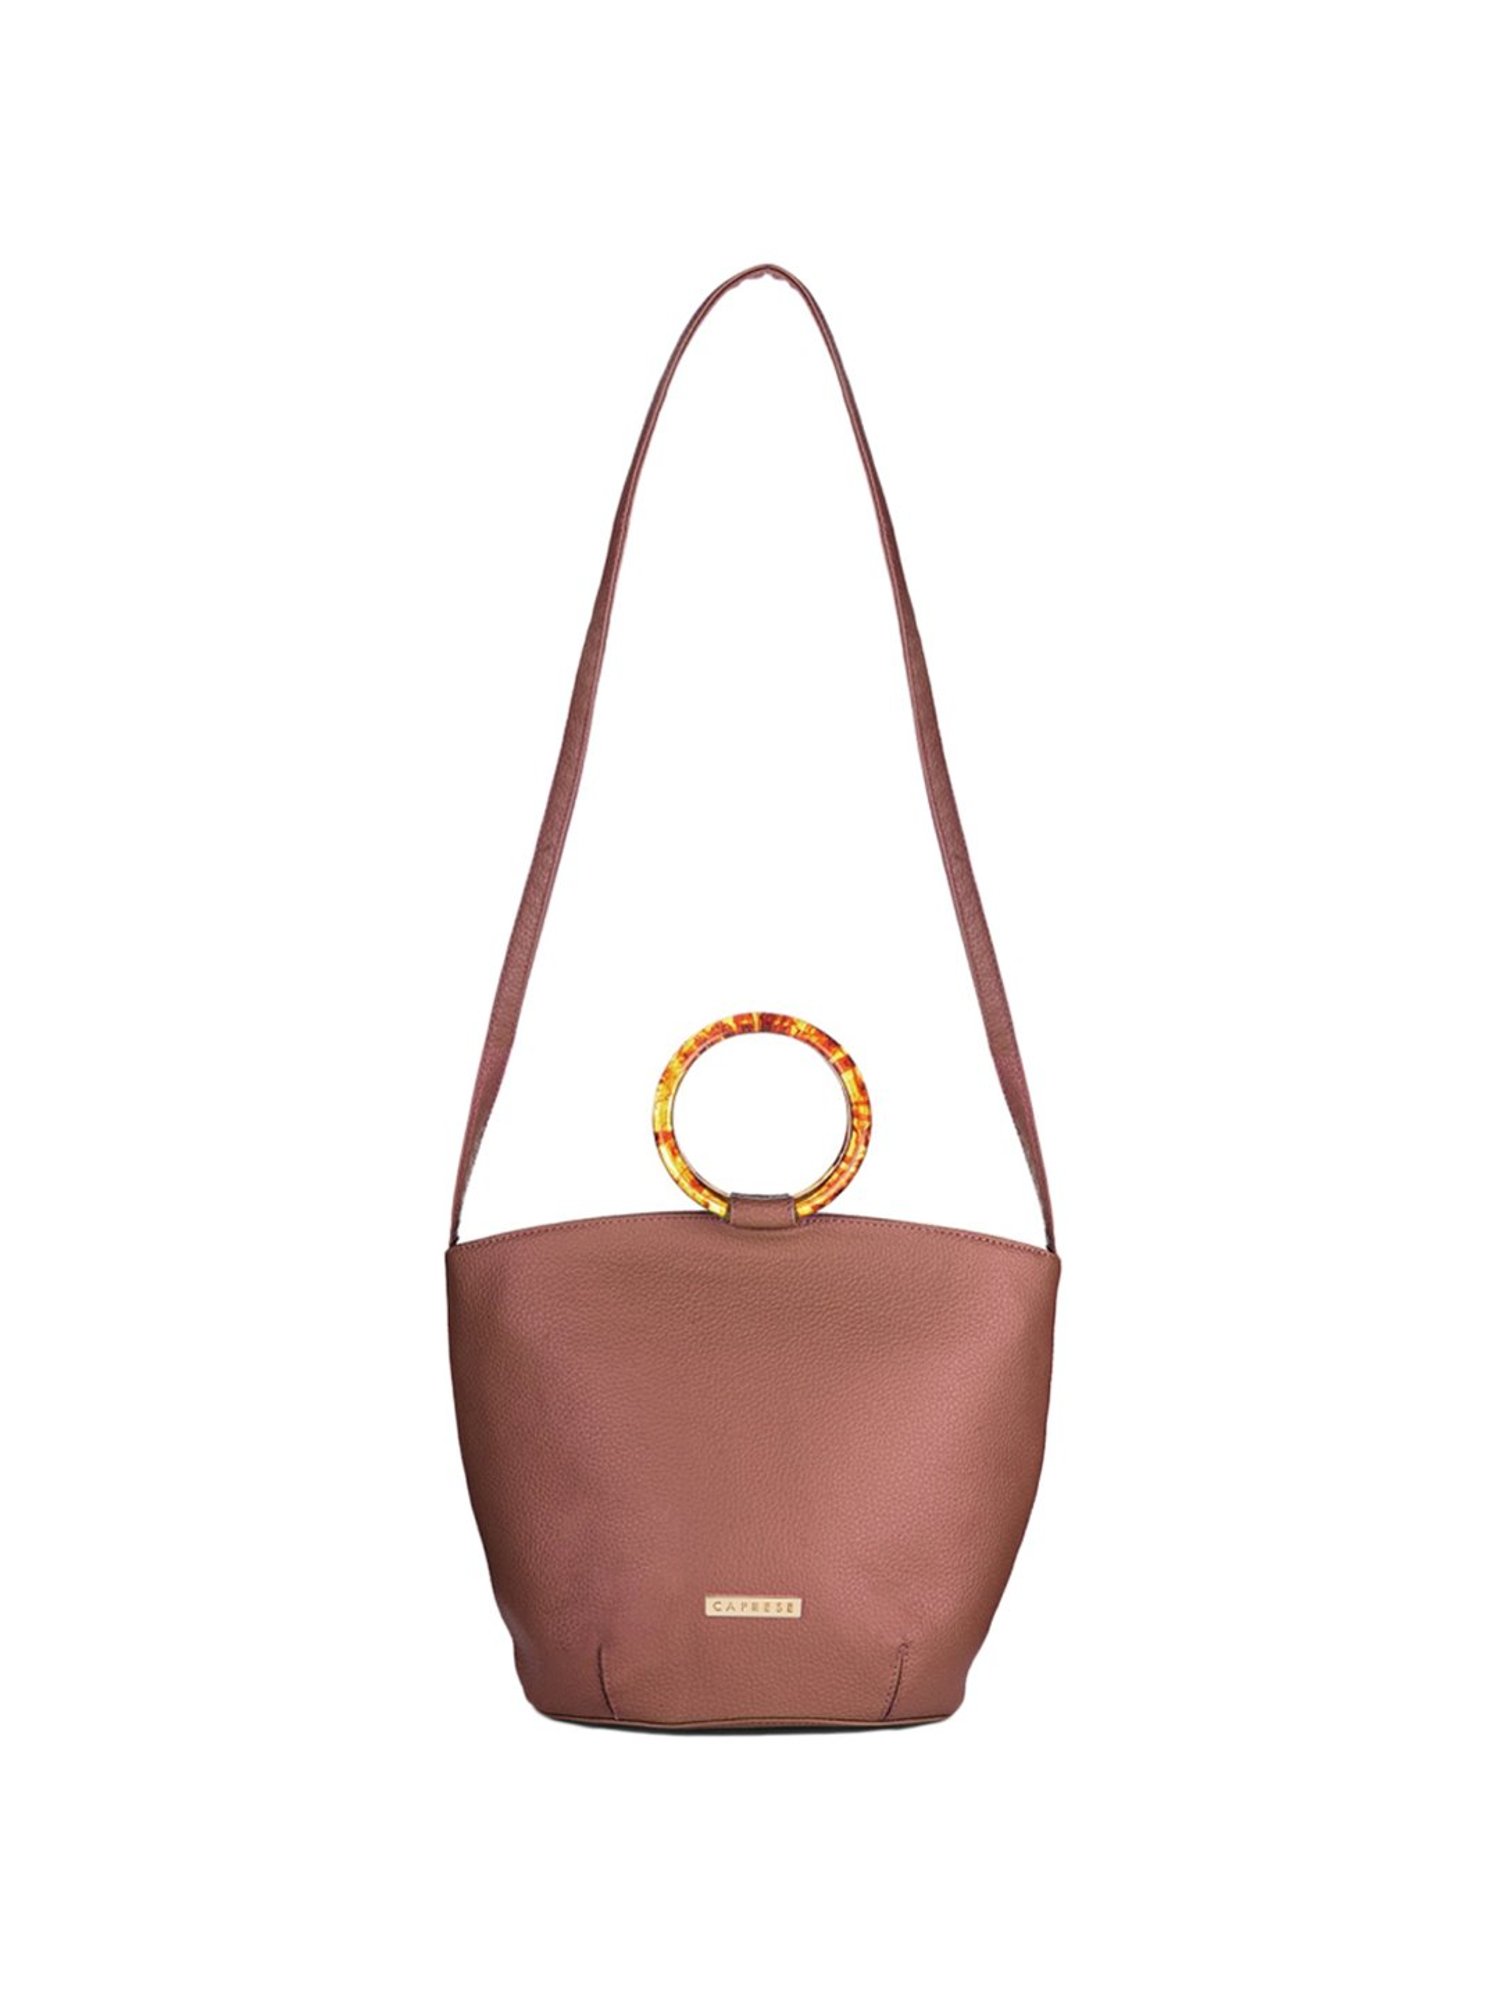 Buy Caprese Blossom Beige Floral Handbag For Women At Best Price @ Tata CLiQ